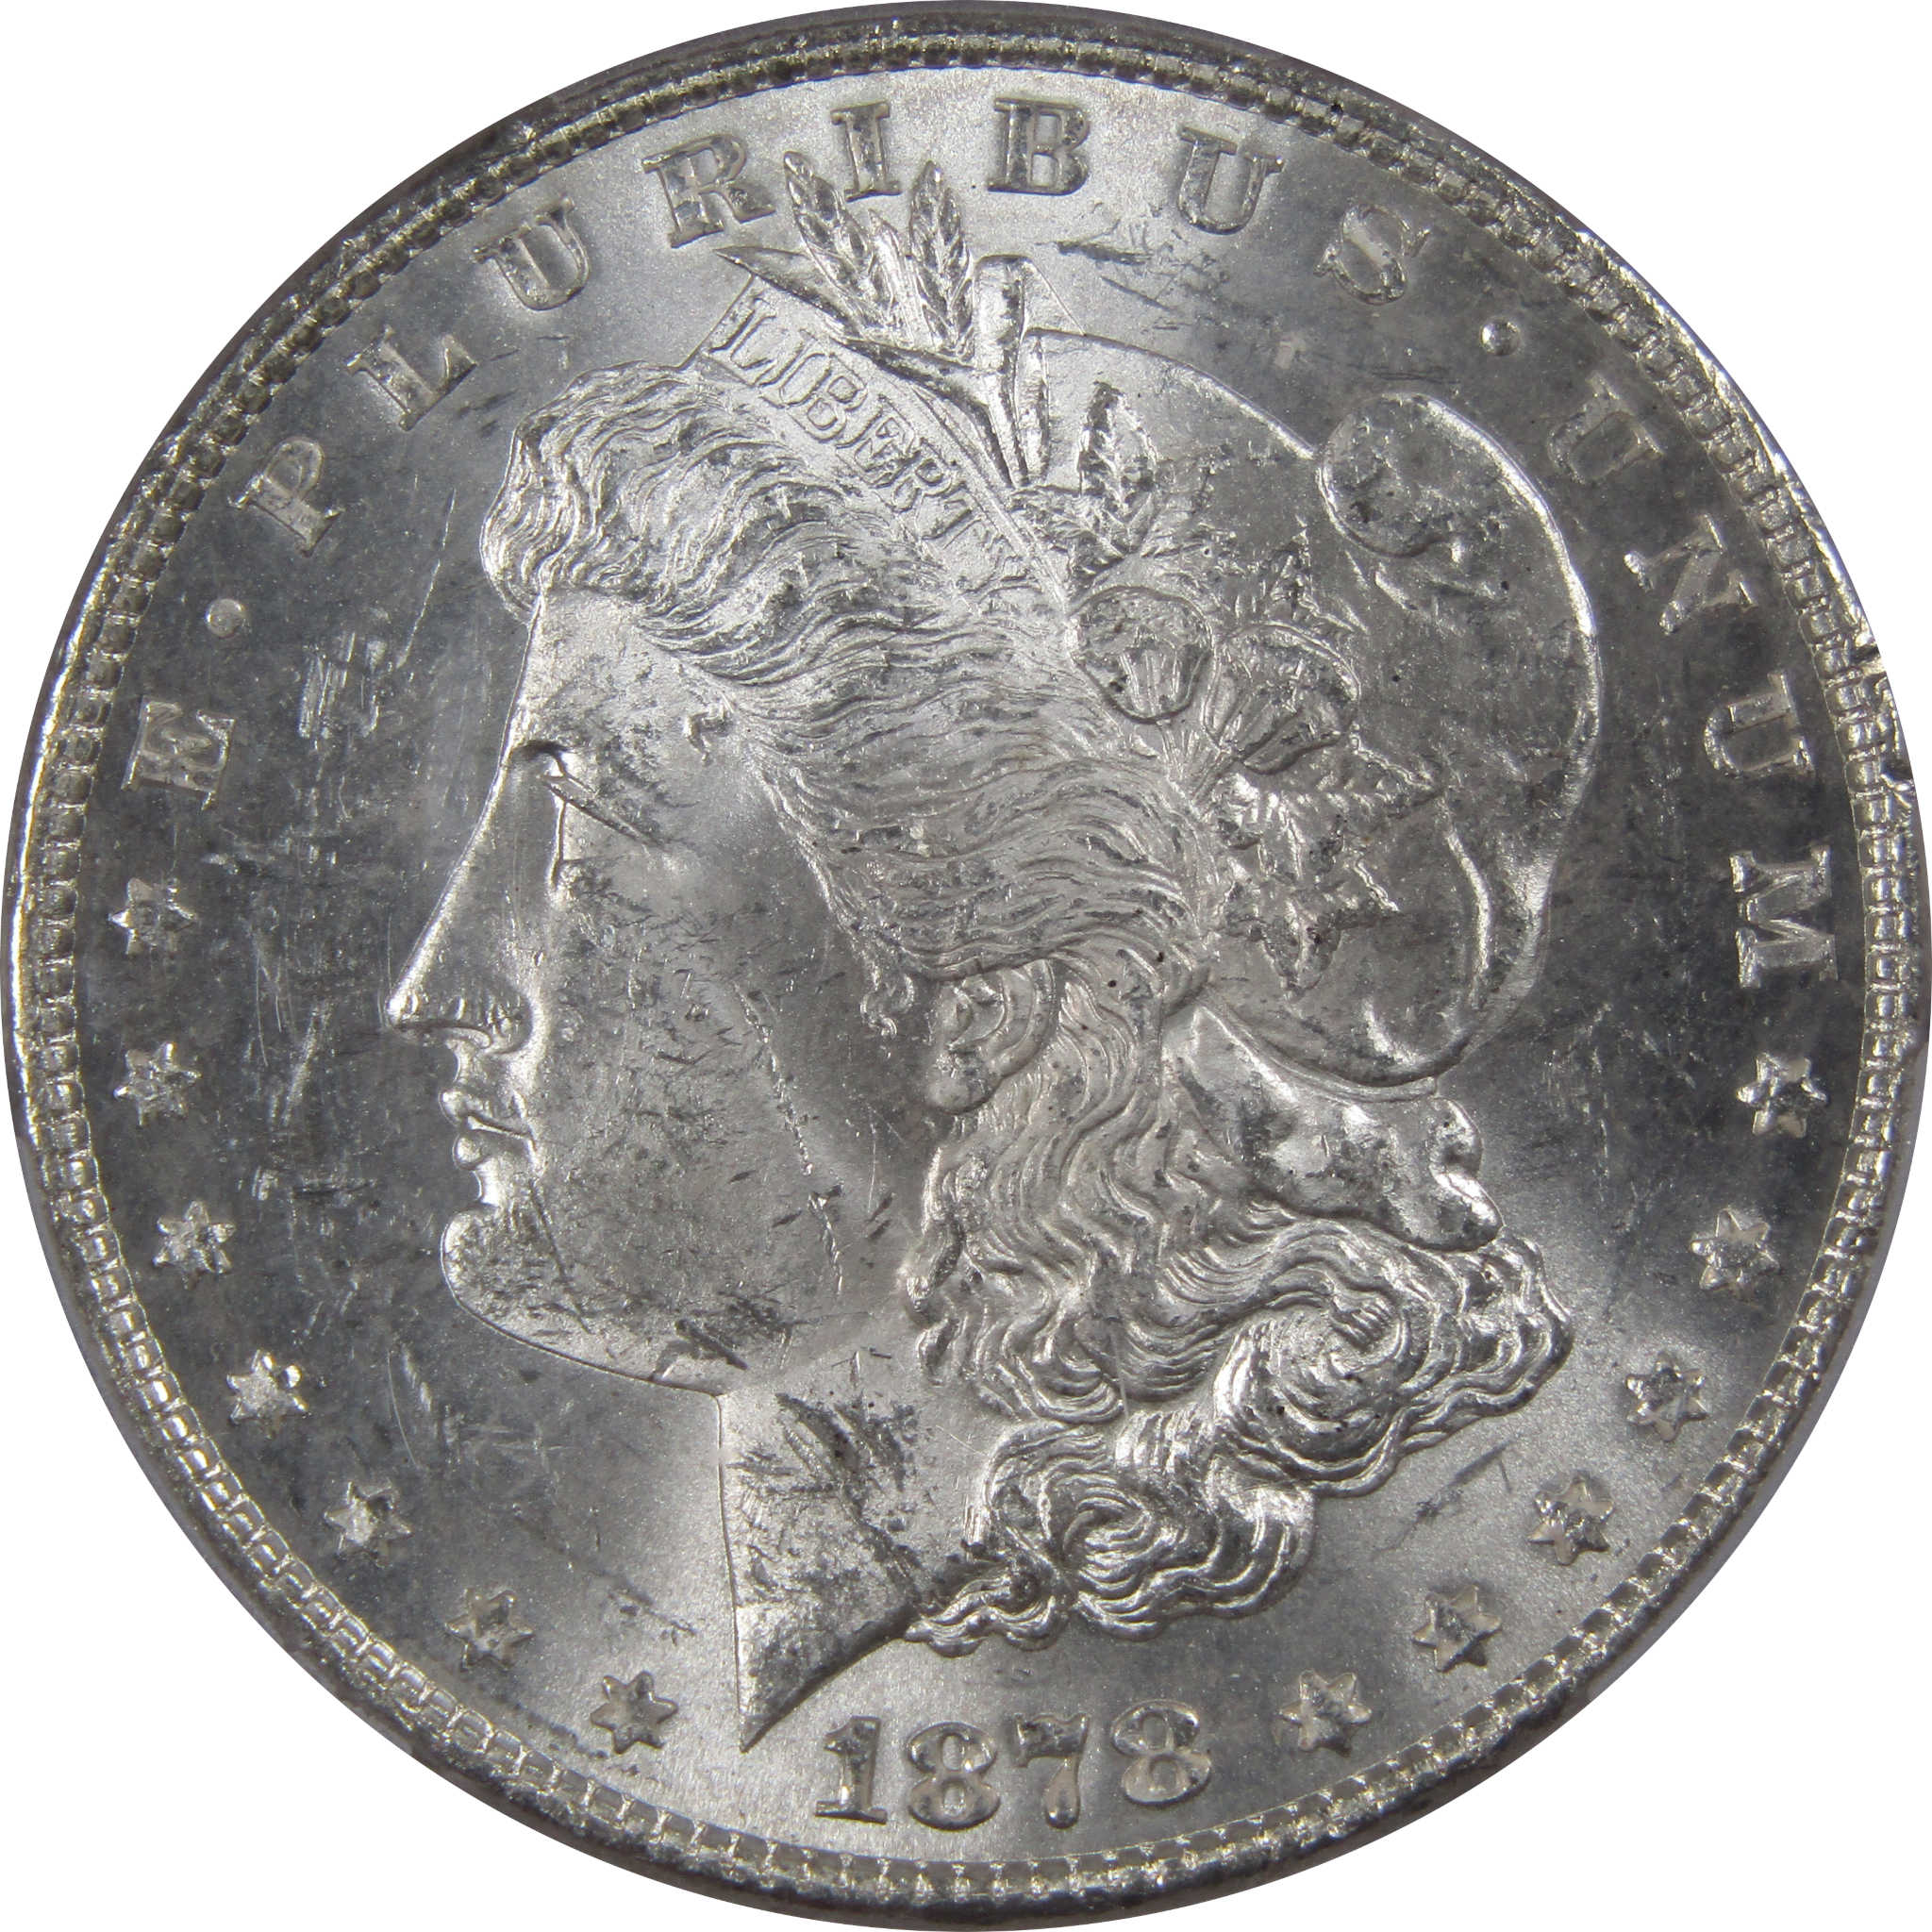 1878 7TF Rev 79 Morgan Dollar MS 62 PCGS Silver SKU:IPC6195 - Morgan coin - Morgan silver dollar - Morgan silver dollar for sale - Profile Coins &amp; Collectibles